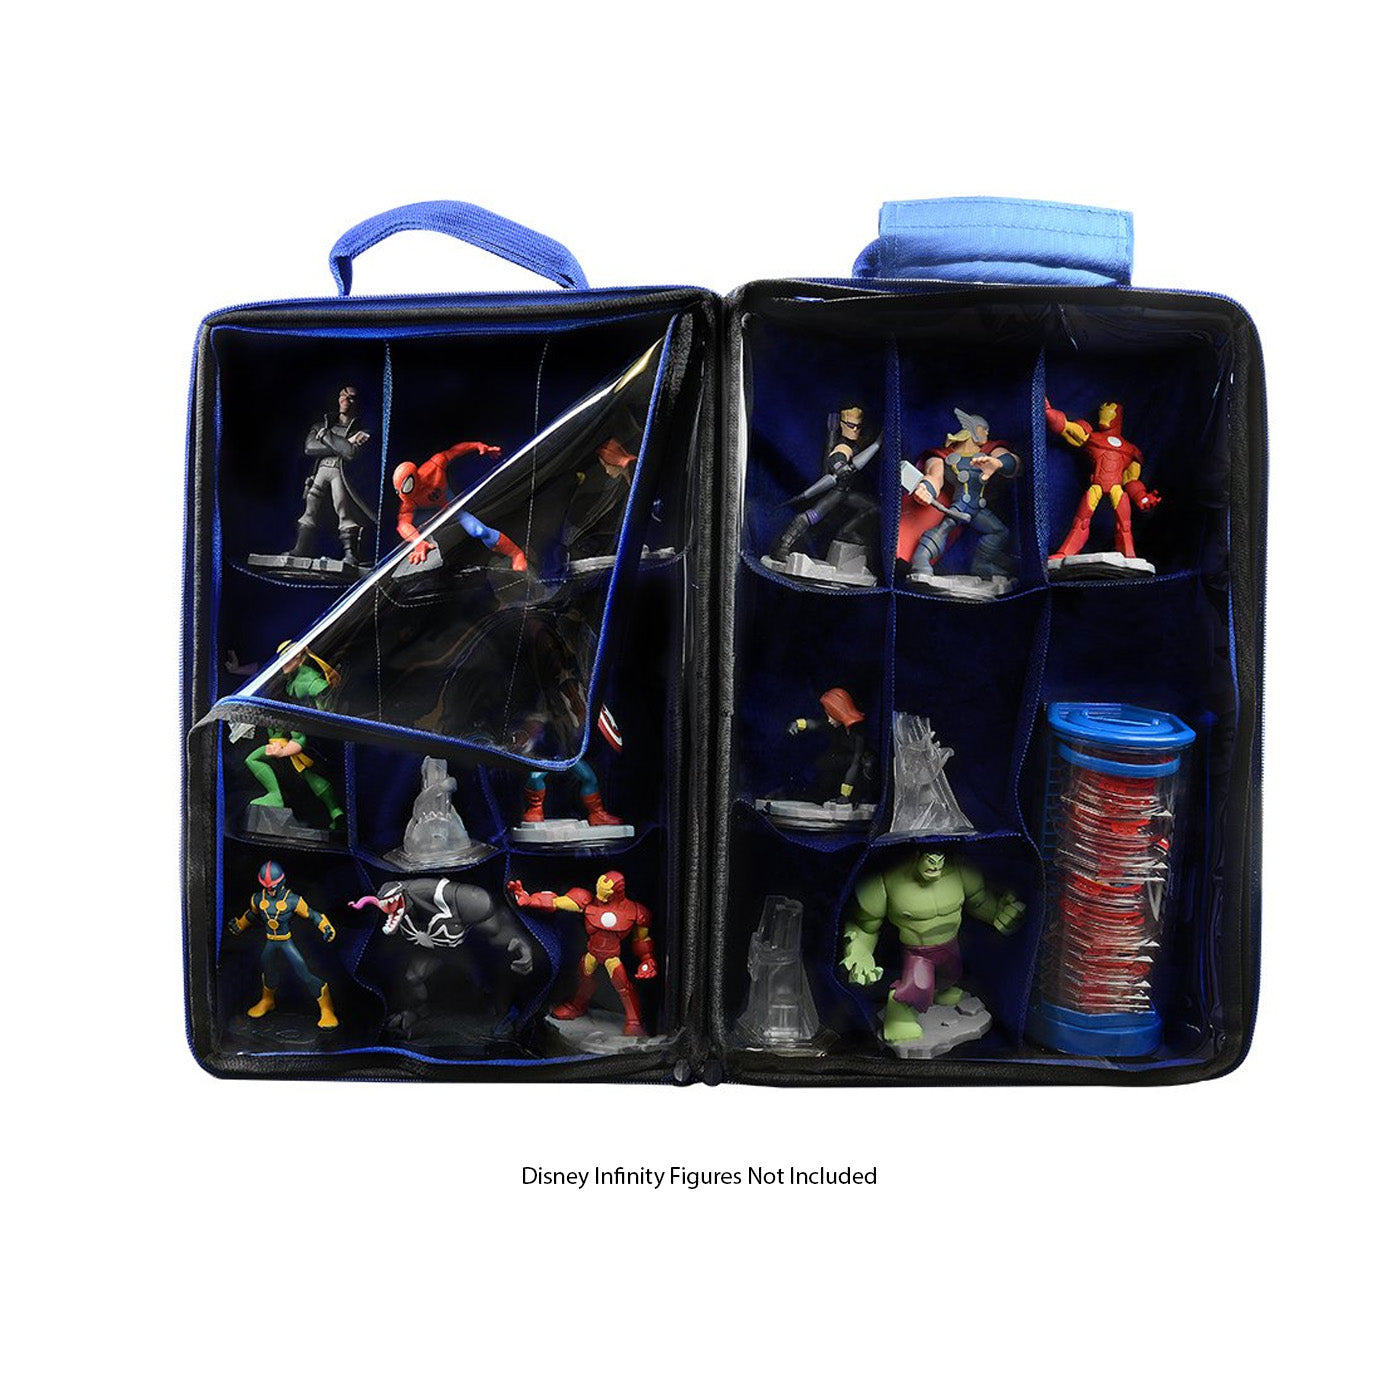 Disney Infinity Case Storage: Armor Bag 2.0 Toy R Us Exclusive